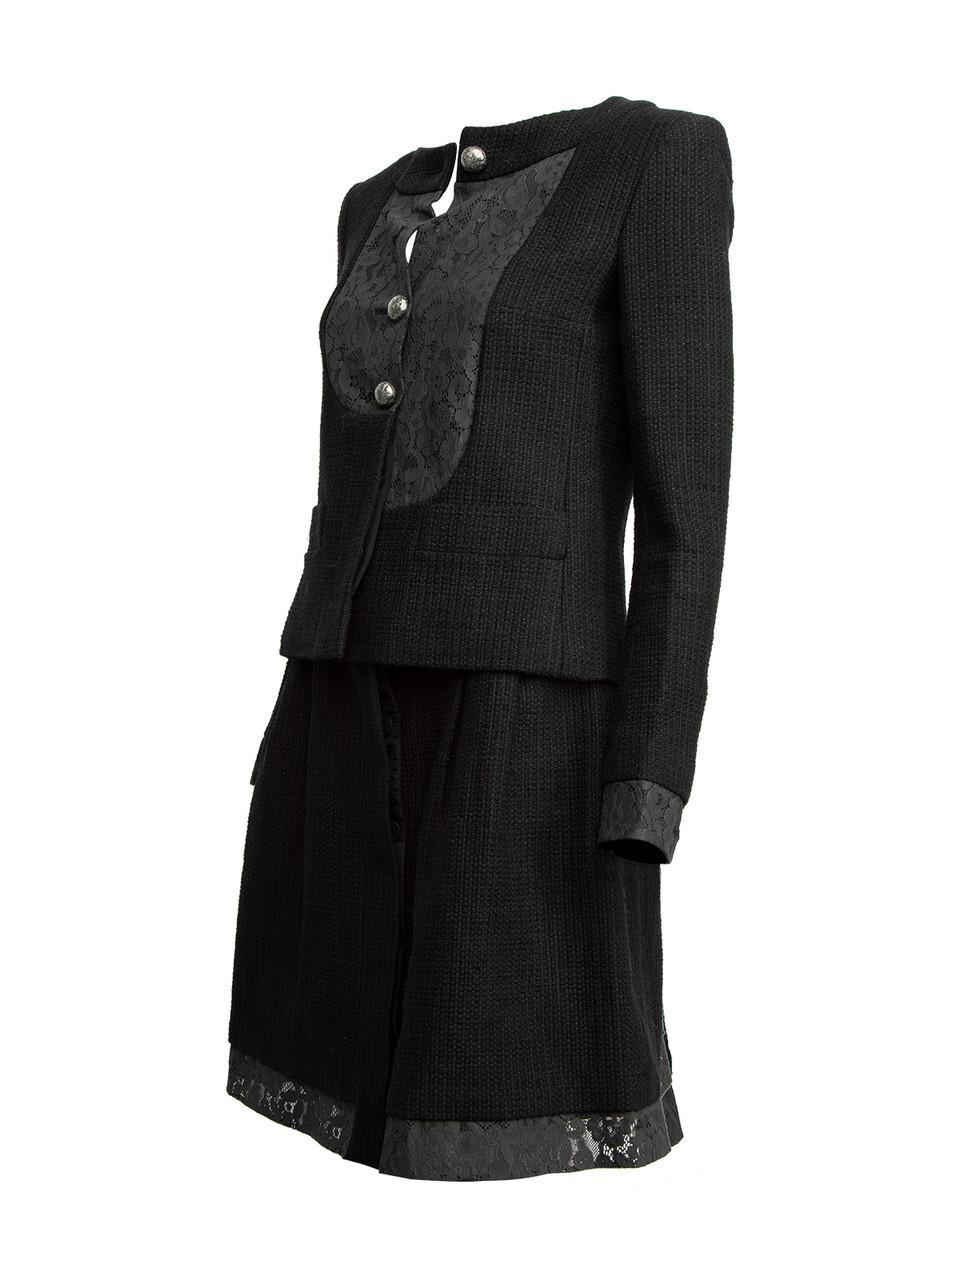 Chanel Women's Vintage Black Chanel Two Piece Suit For Sale 3